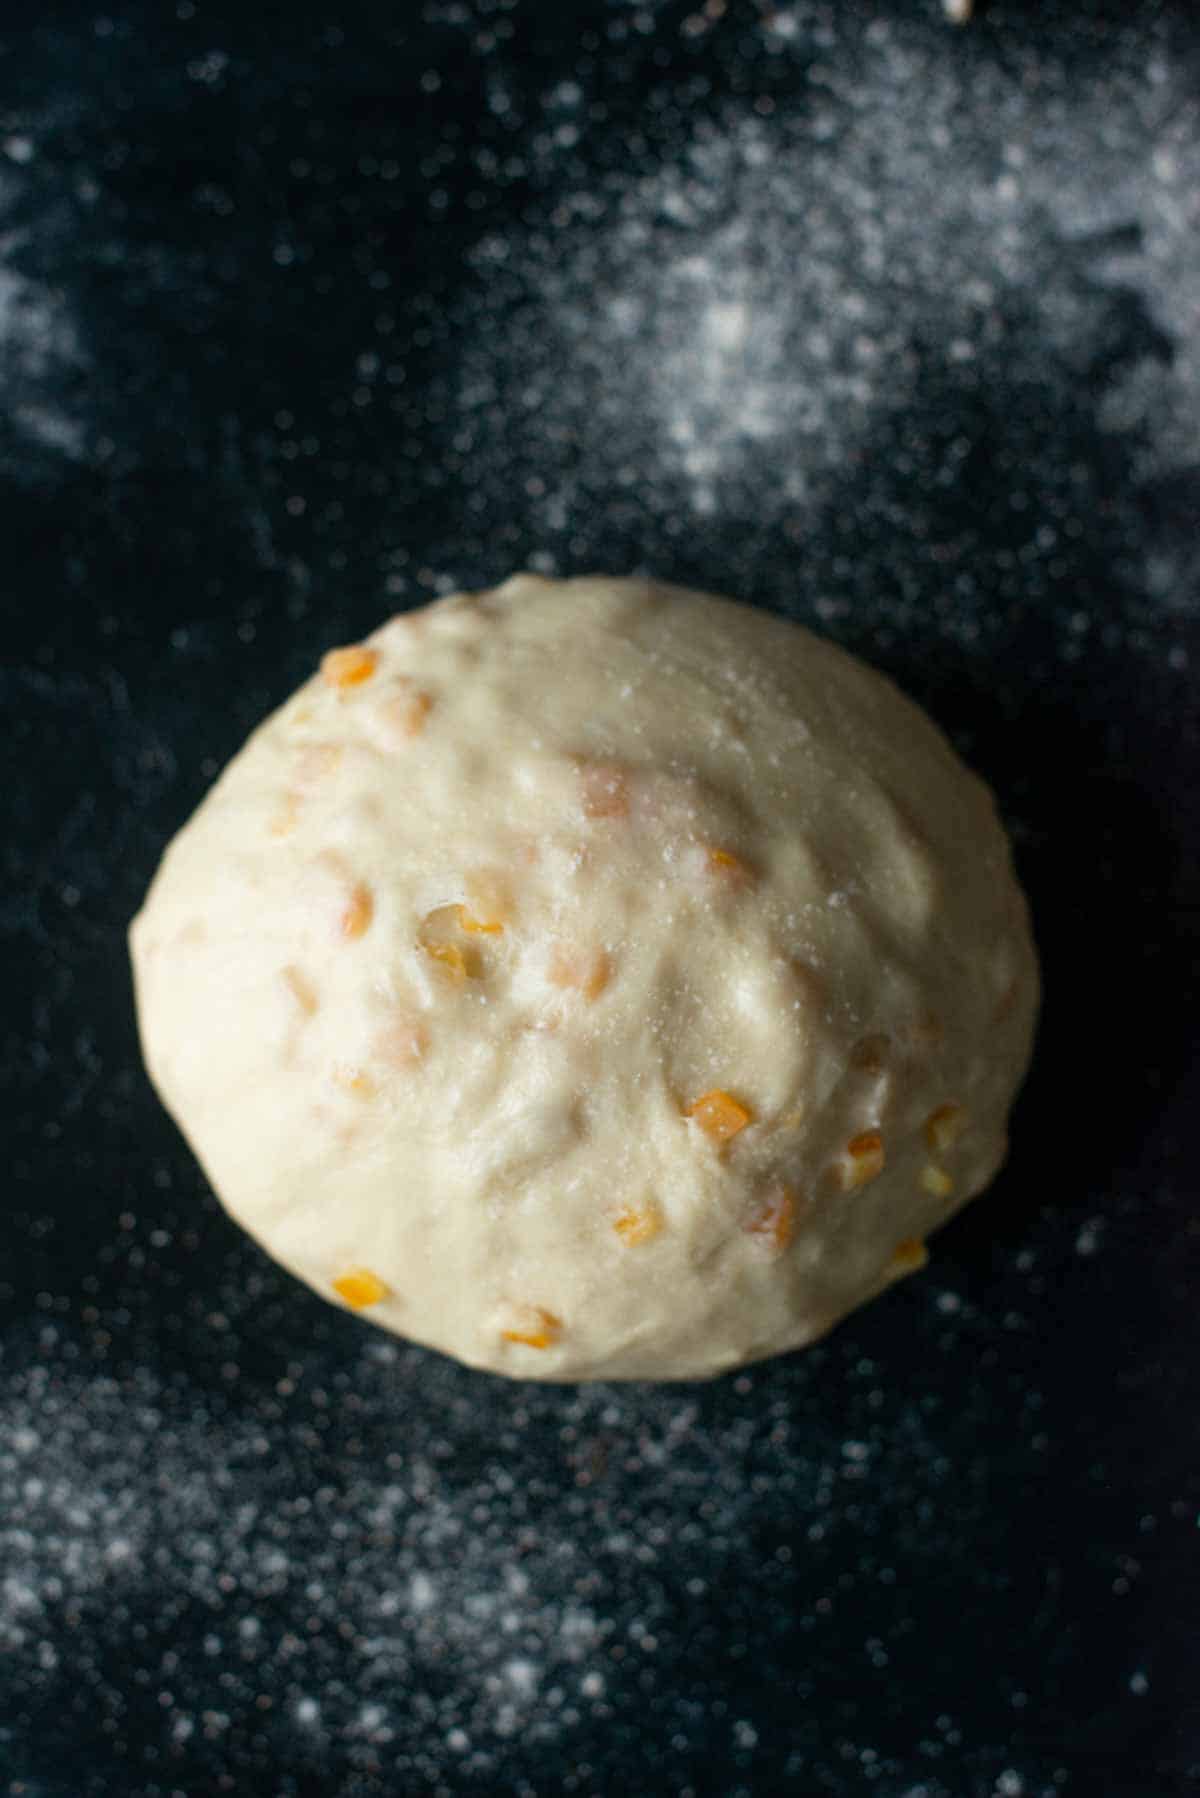 Picture: Vegan Panettone dough